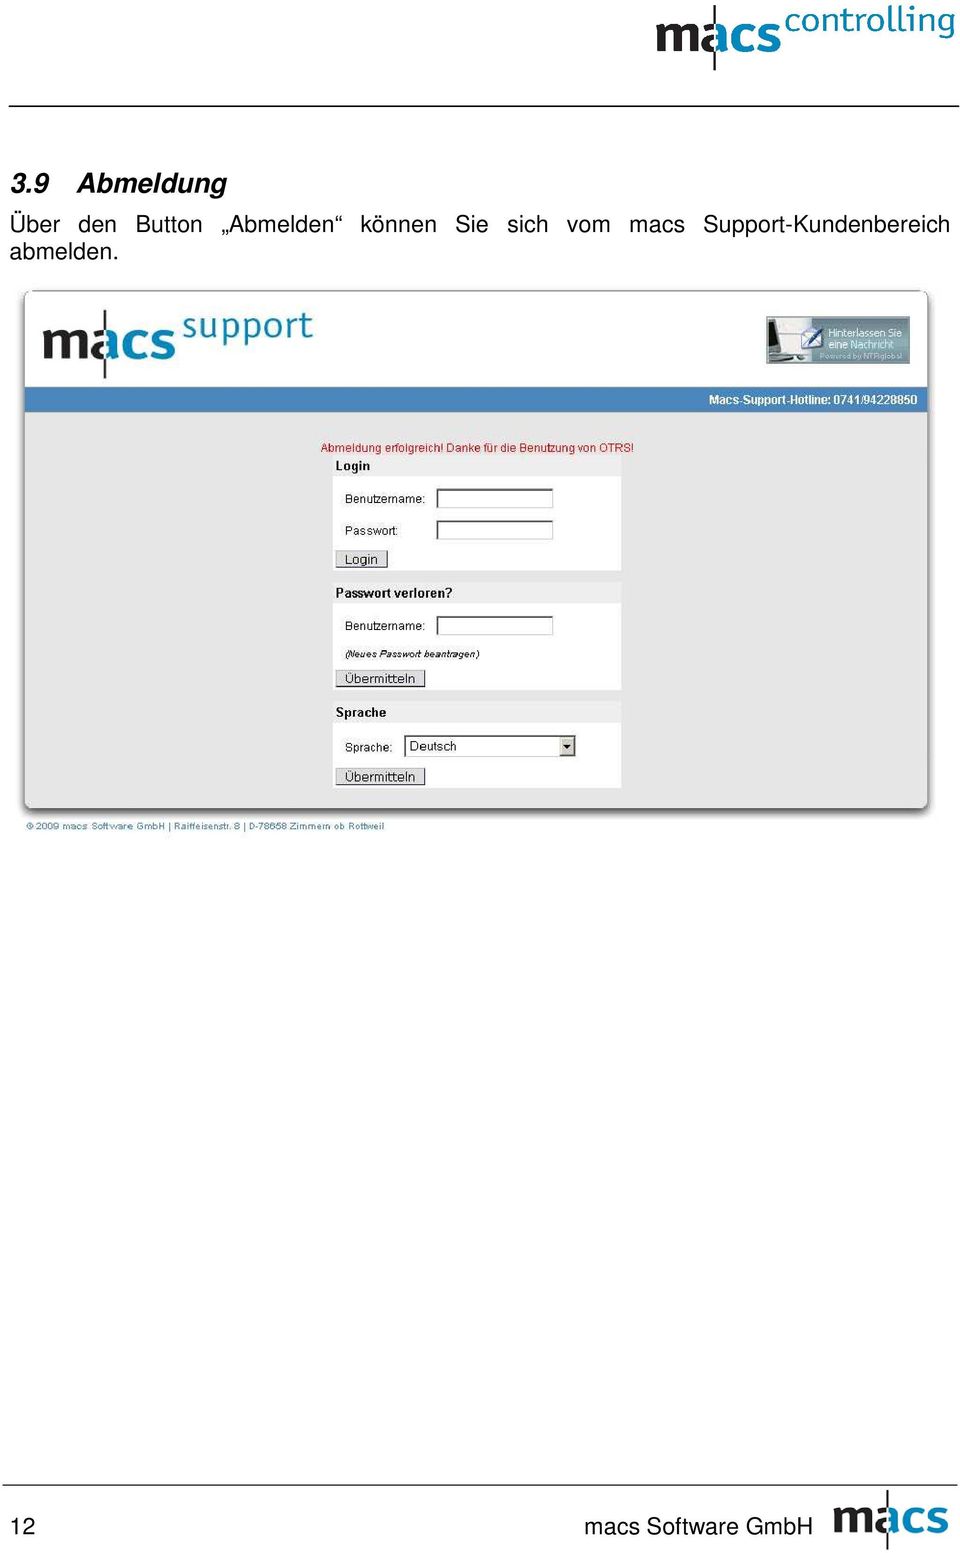 macs Support-Kundenbereich